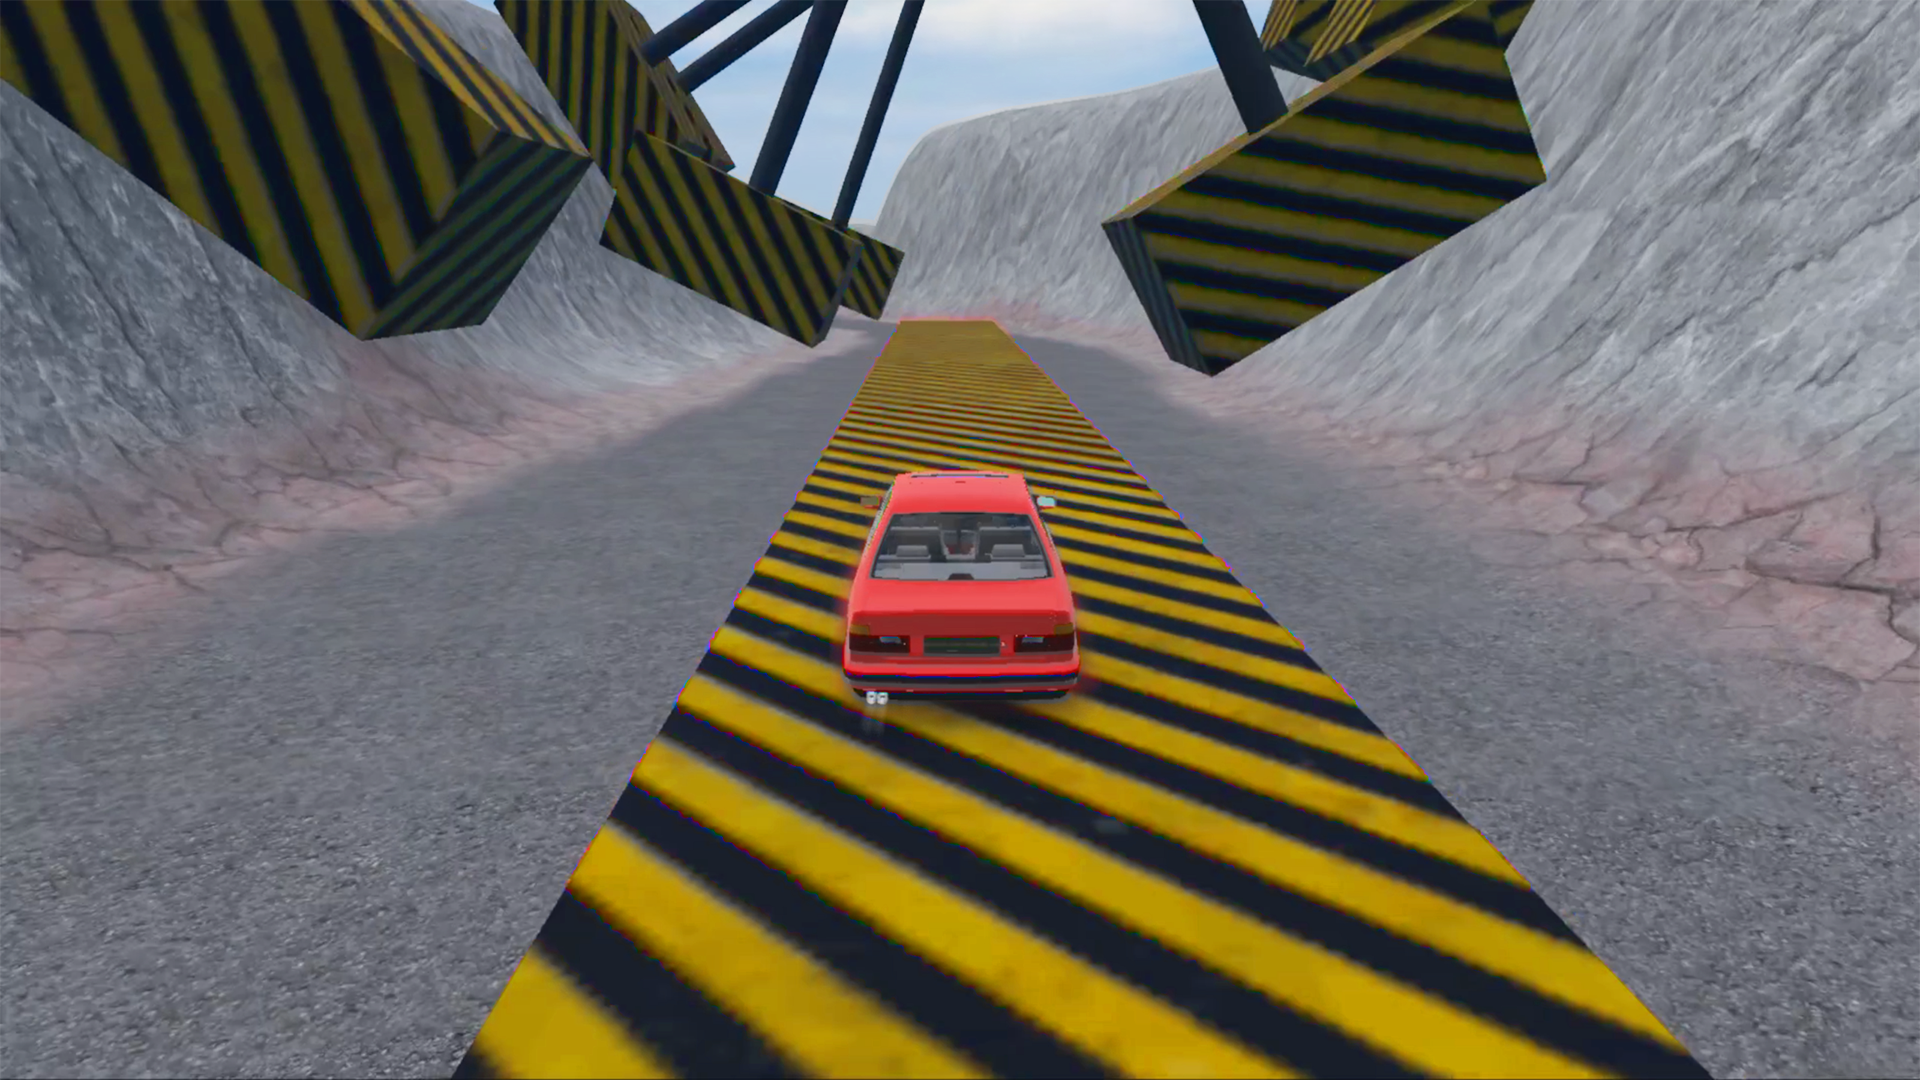 Car Crash — Battle Royale screenshot game